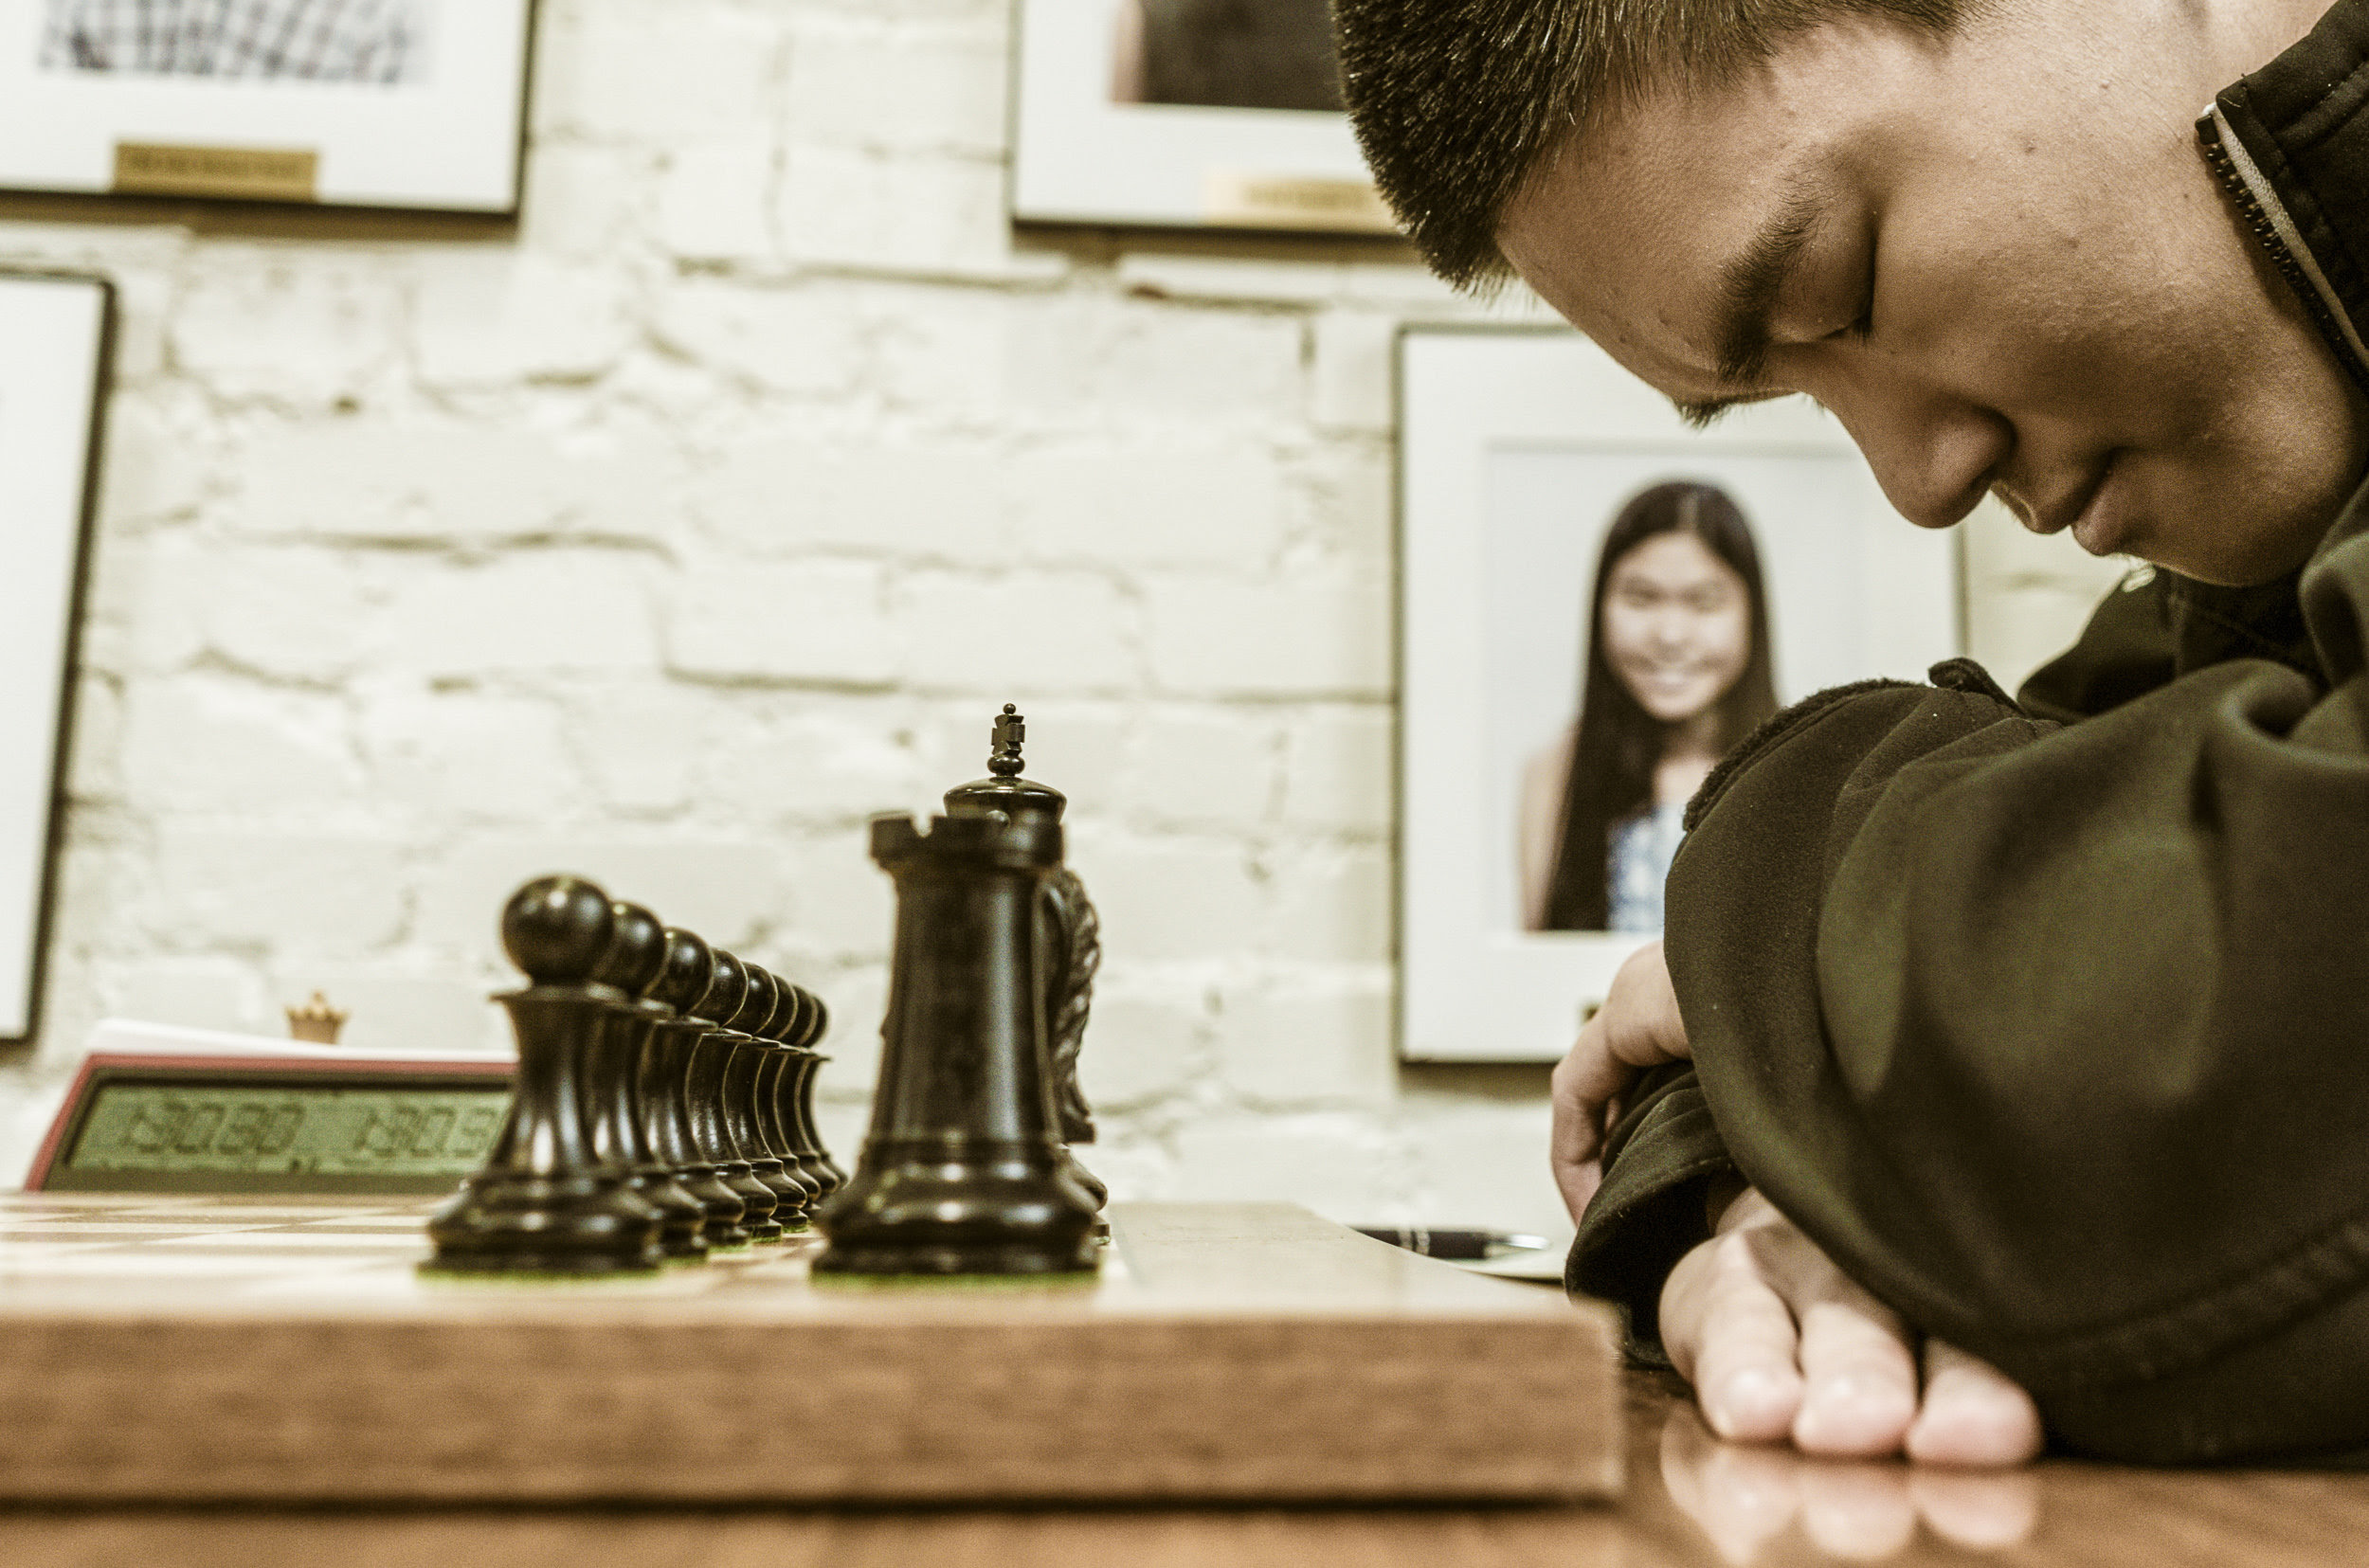 ChessBomb Blog: 2019-03